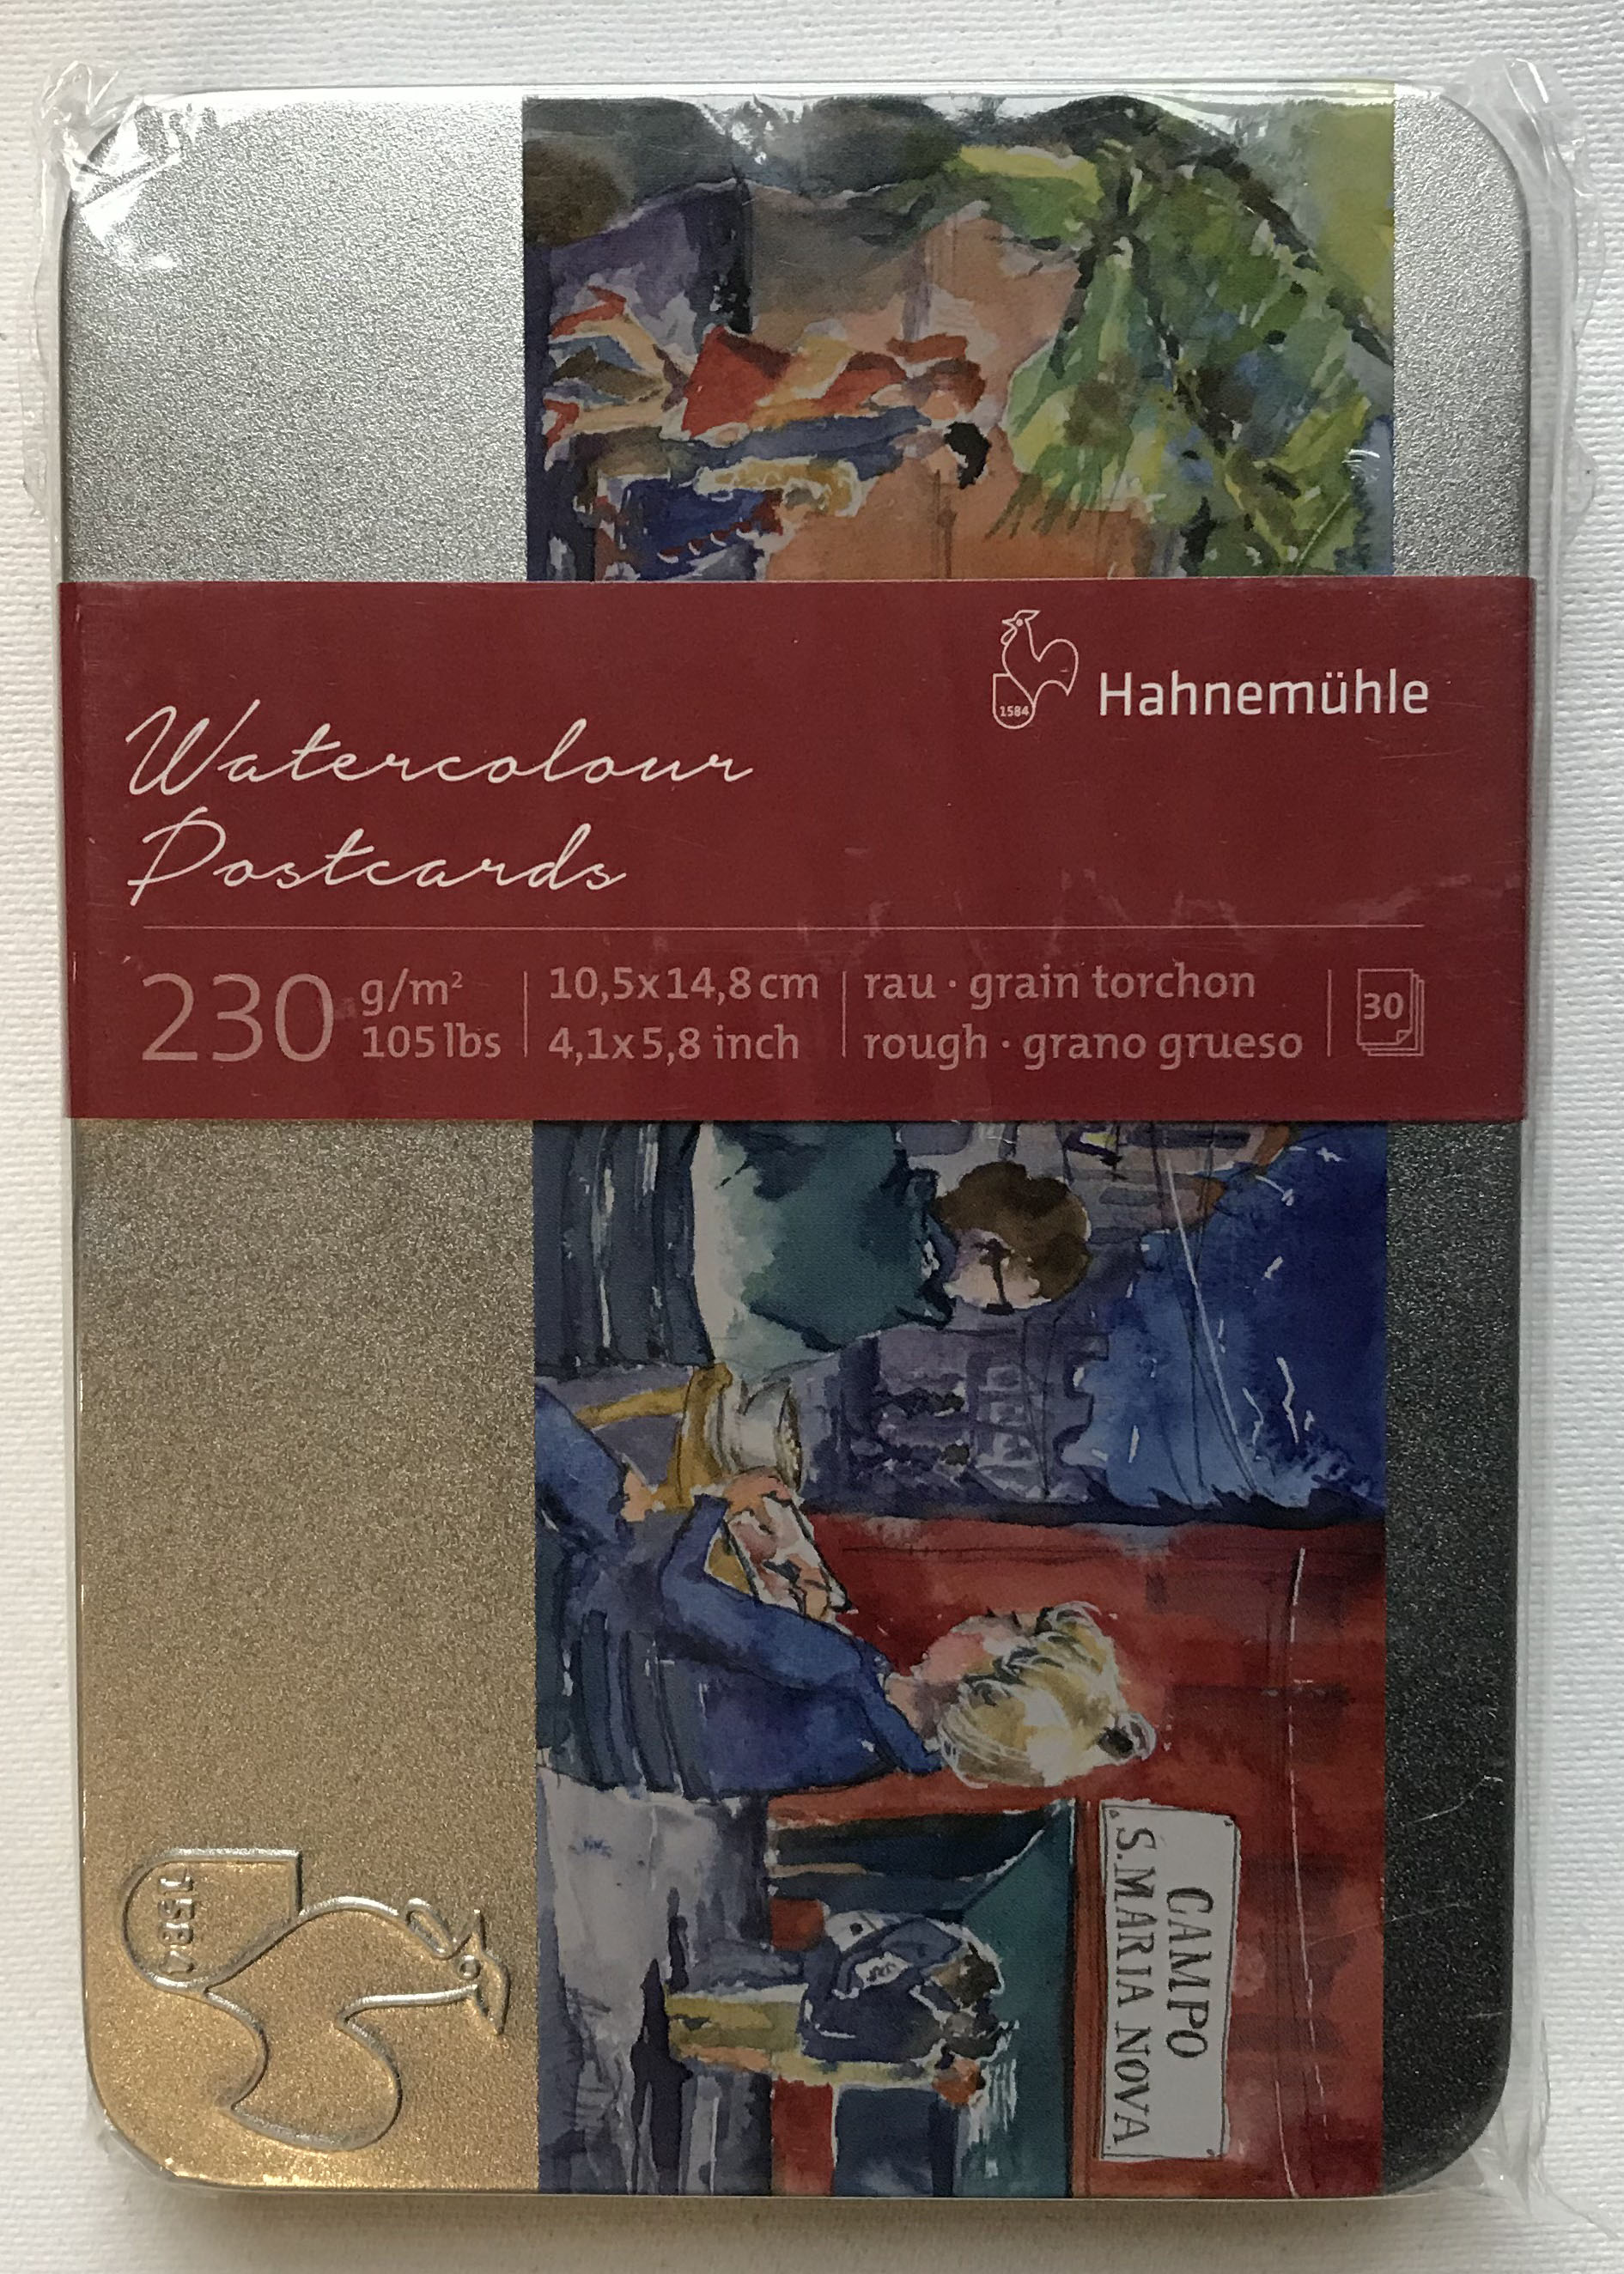 Hahnemuhle Aquarellpostkarten Metallbox